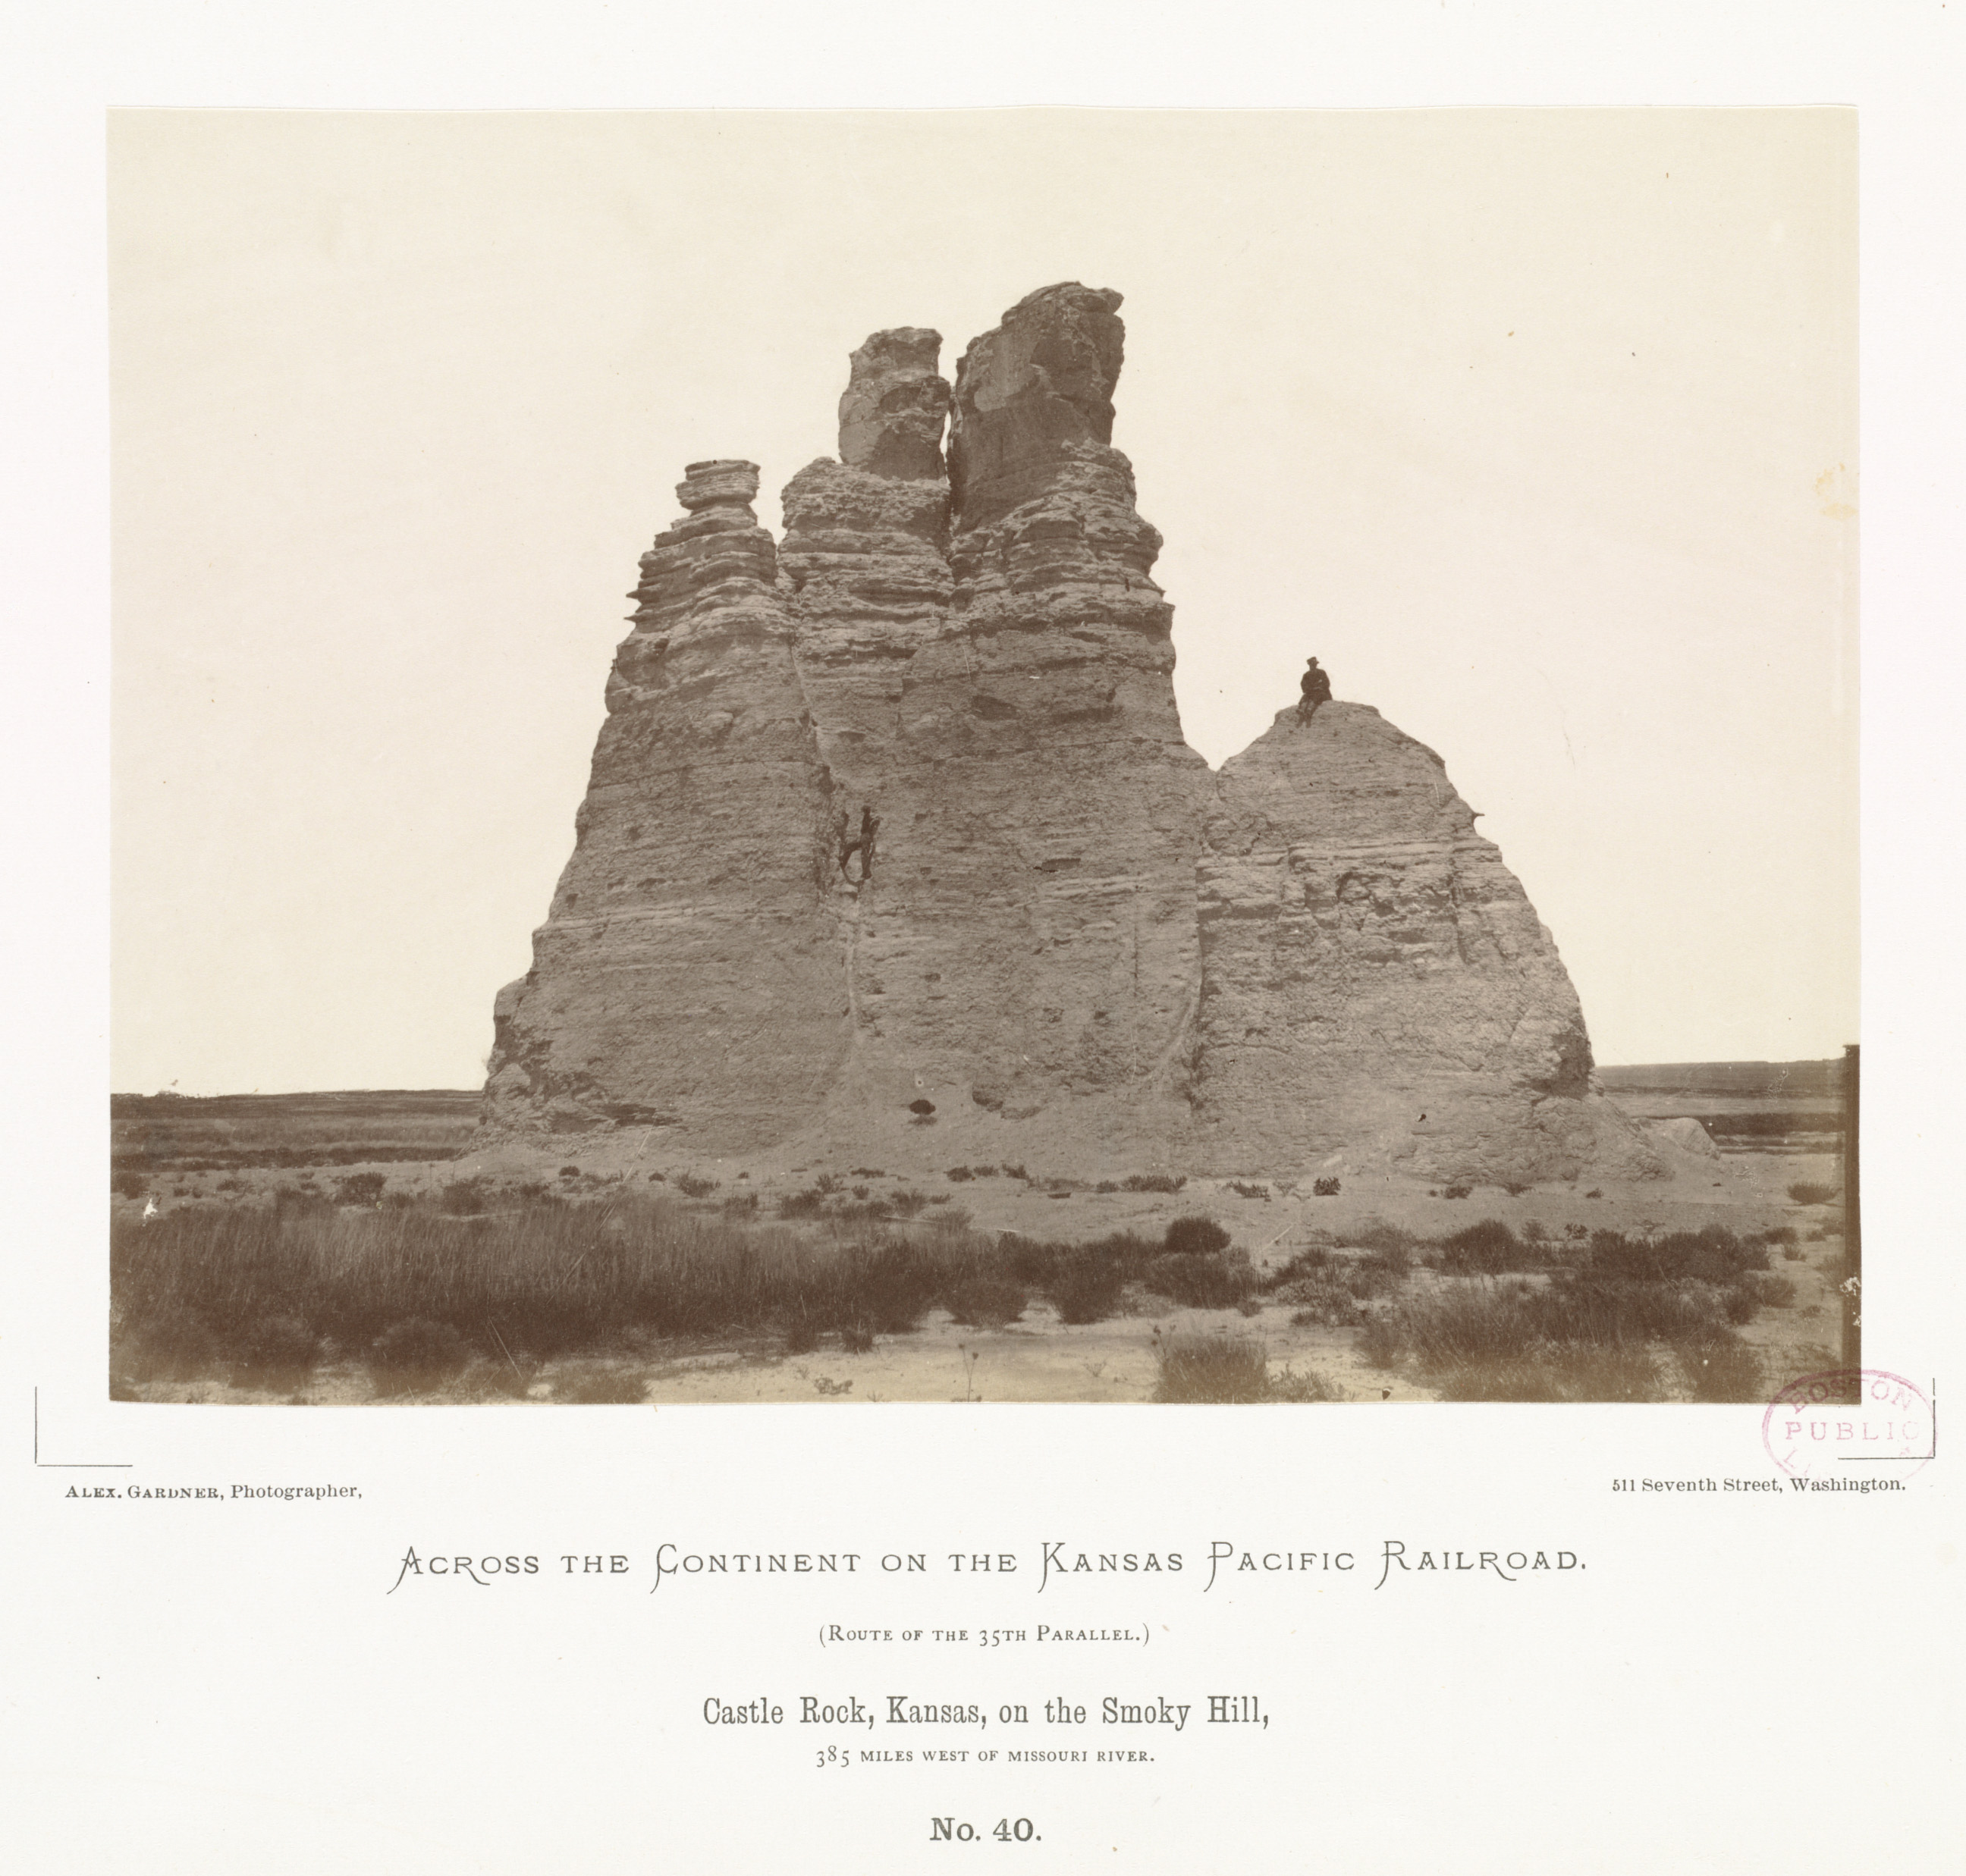 Castle Rock, circa 1867-1869